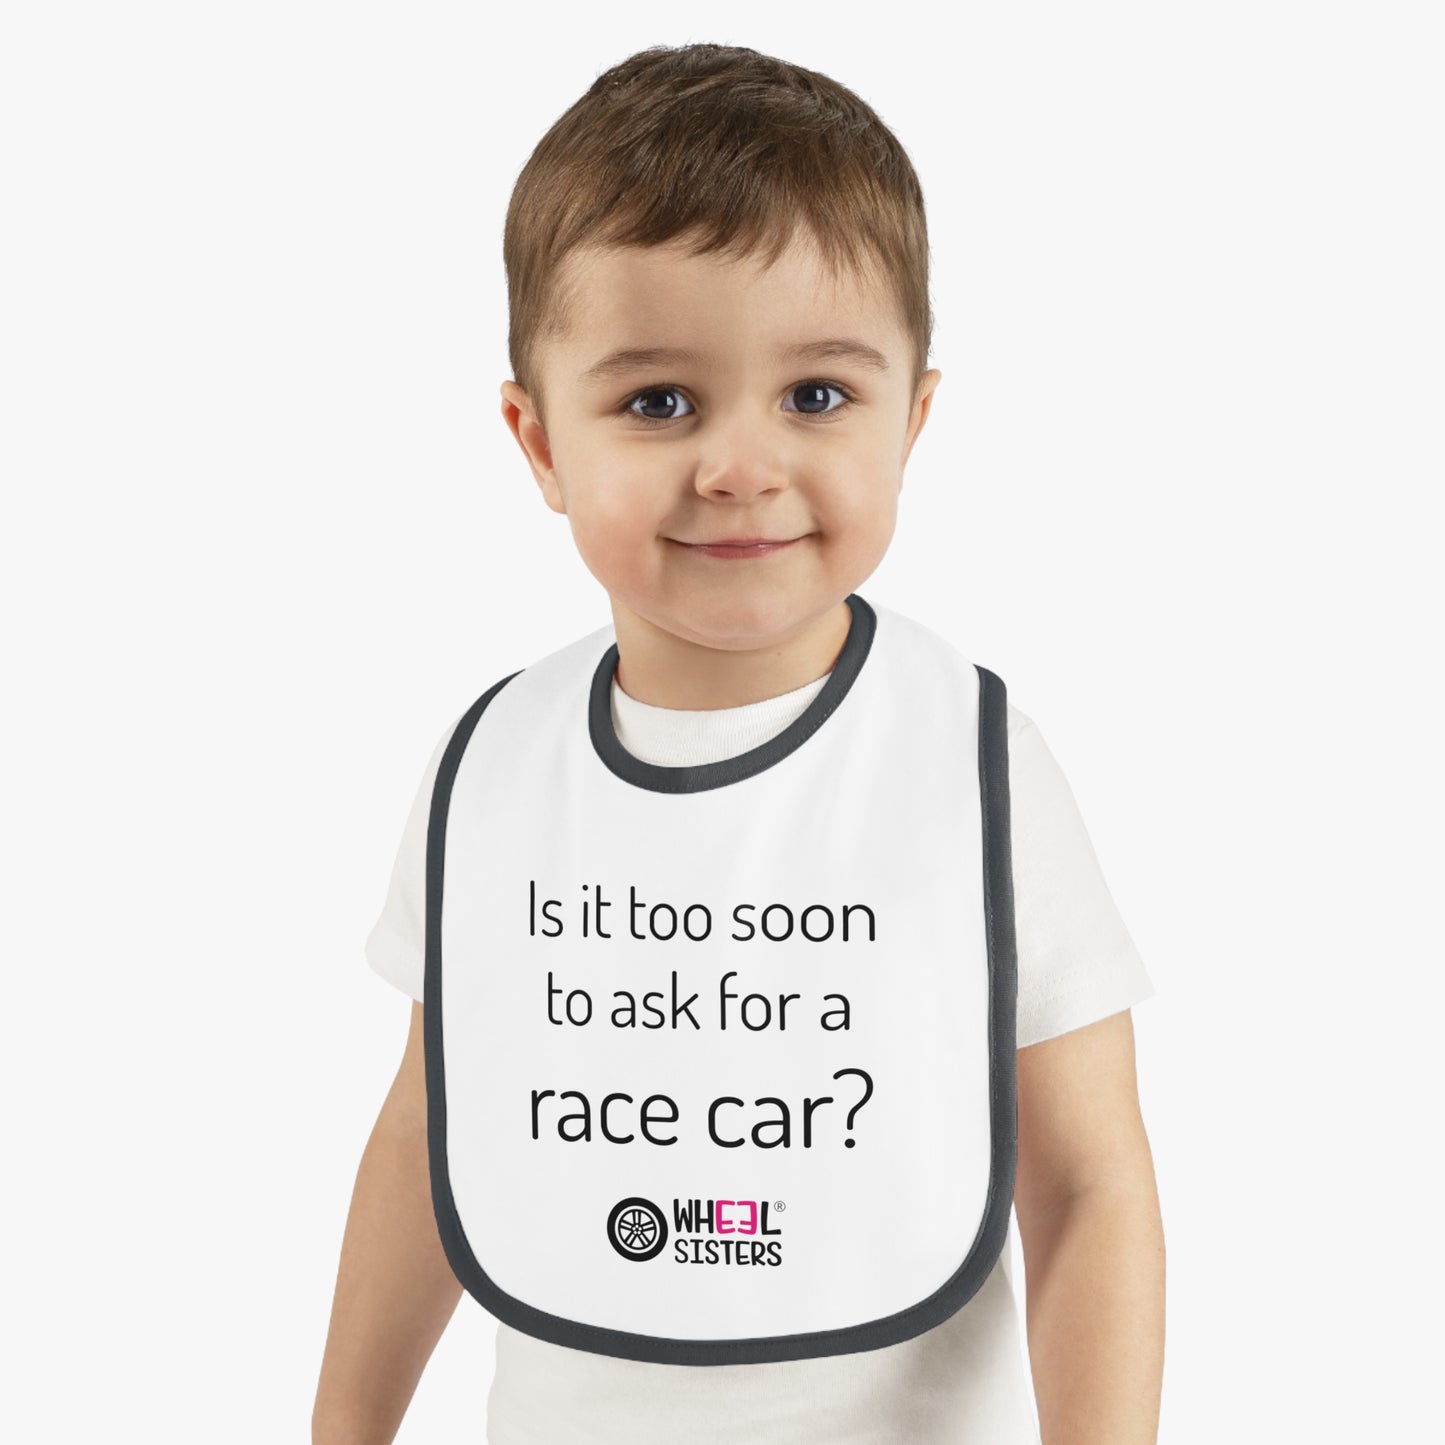 WHEEL SISTERS Baby Bib race car